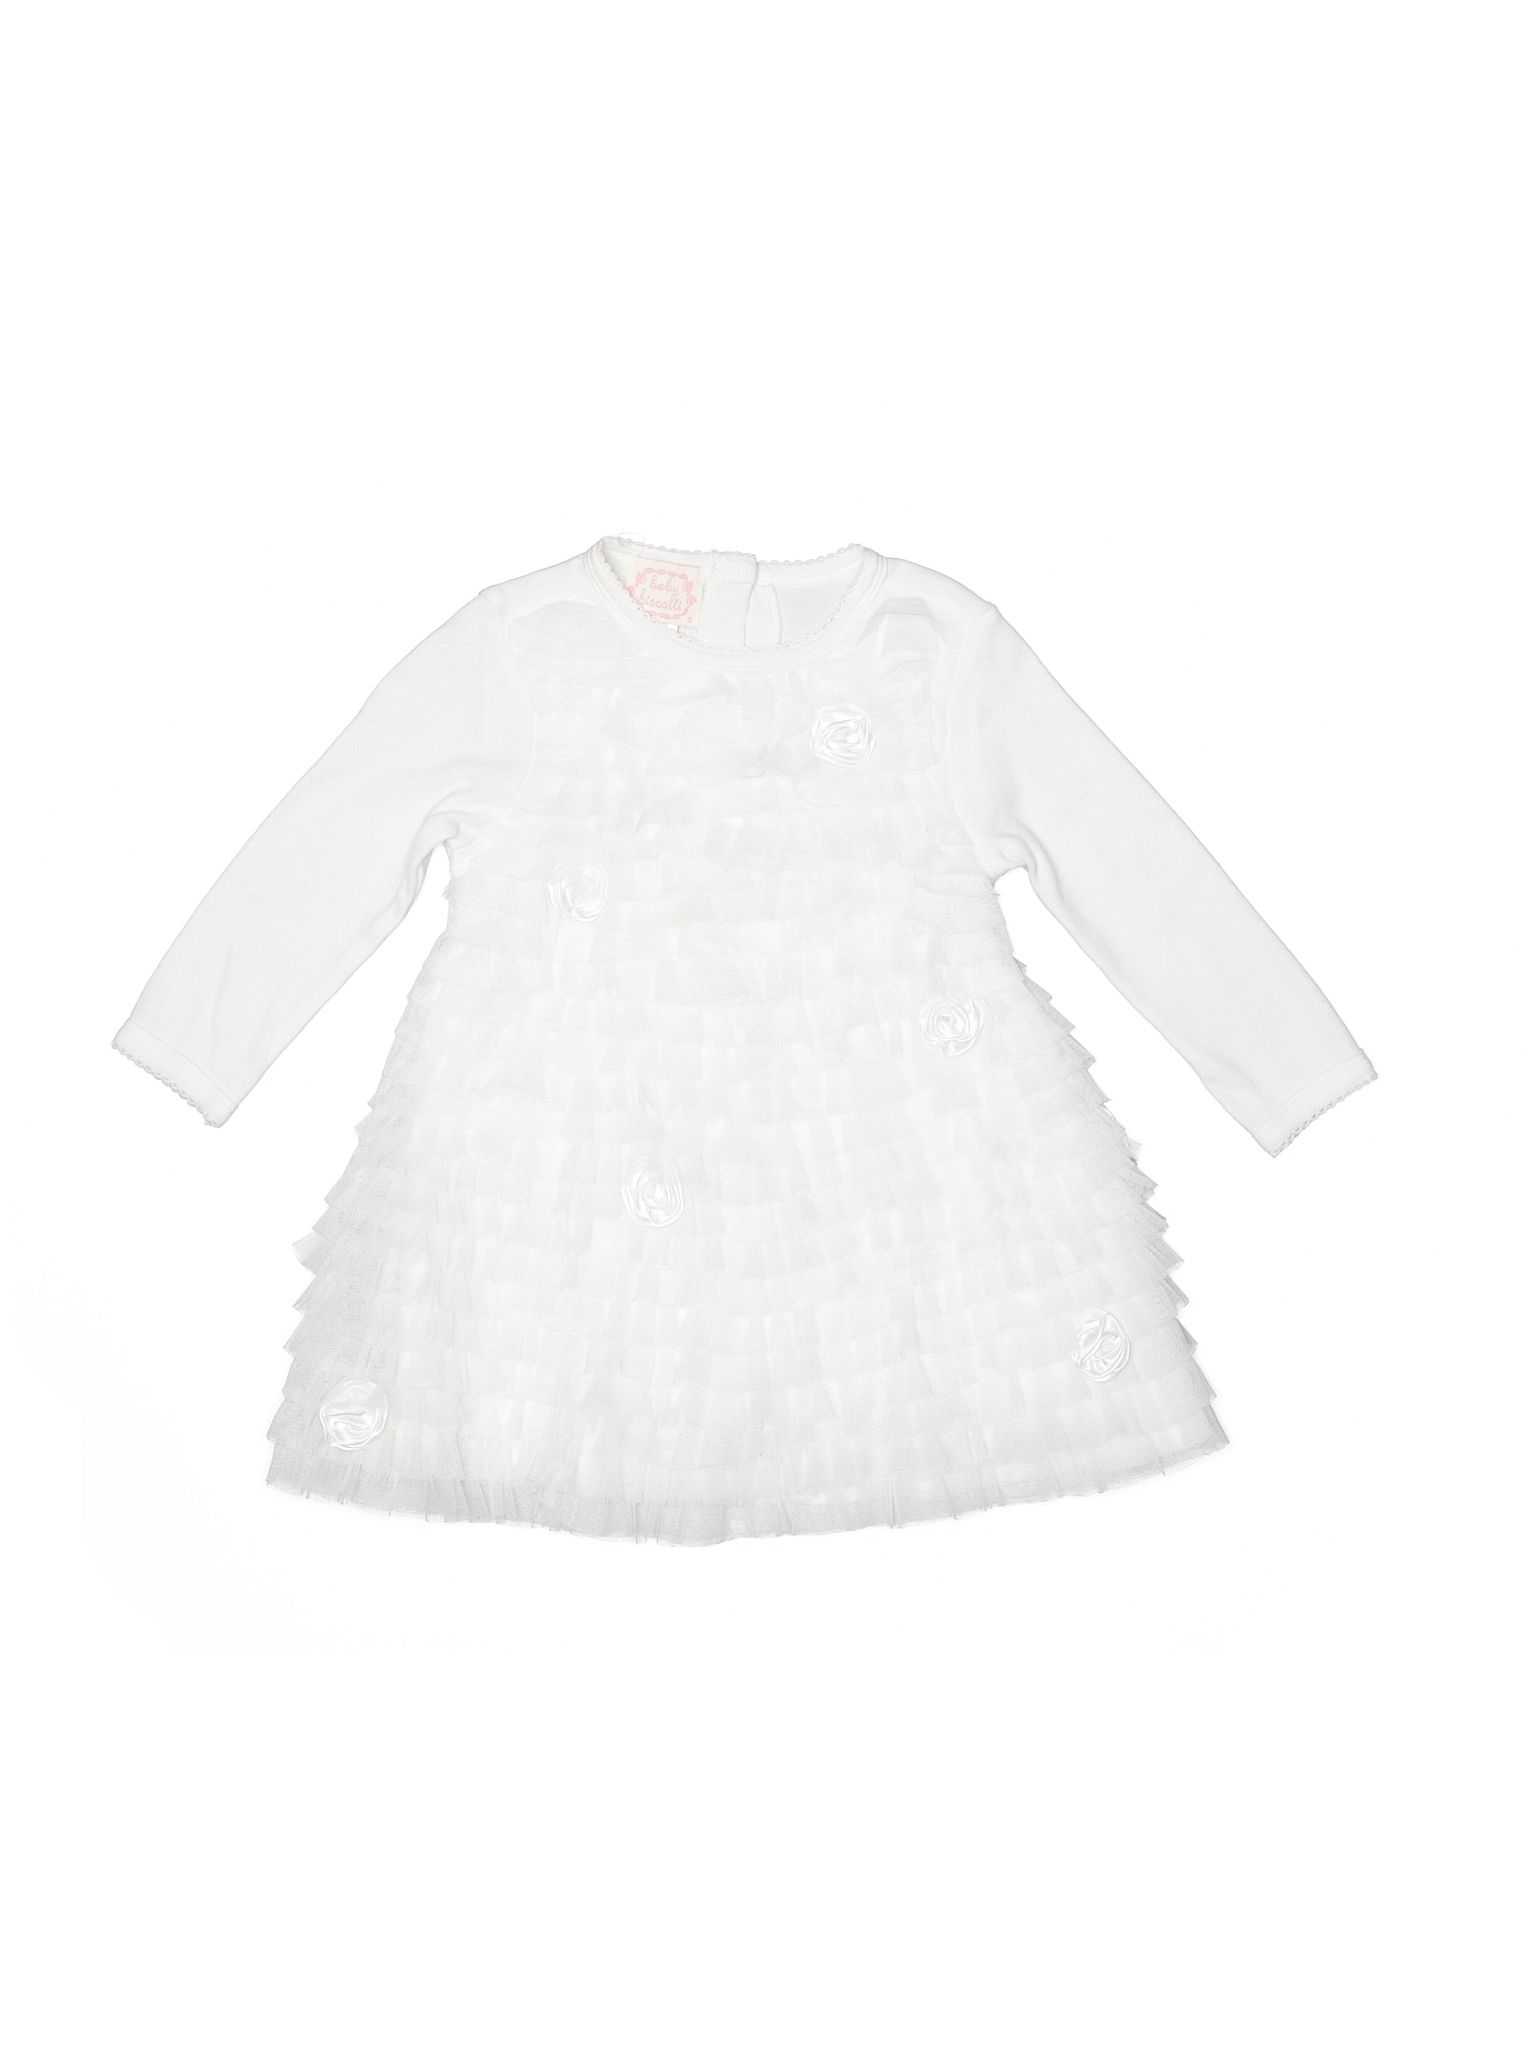 Baby Biscotti Dress Size 12 mo: White Girls Skirts & Dresses - 35136223 | thredUP